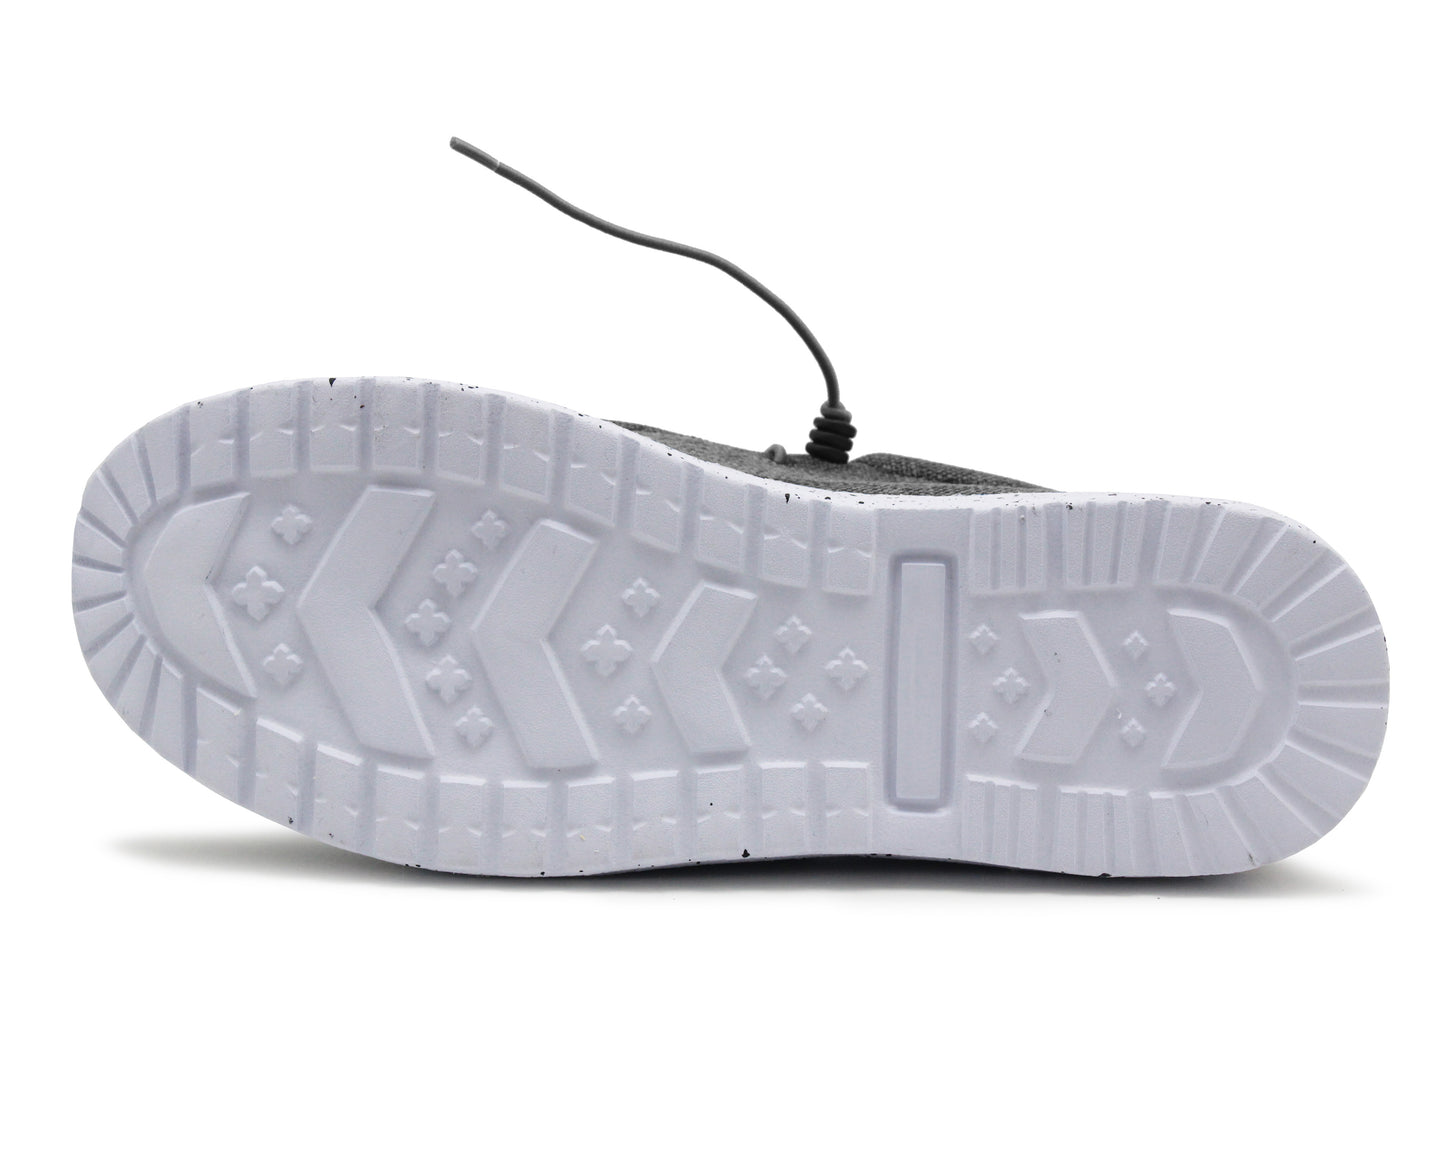 Mens Super Lightweight Slip On Memory Foam Elastic Laces EVA Foam Sole Casual Sneaker Wallabee Trainers Shoes Grey